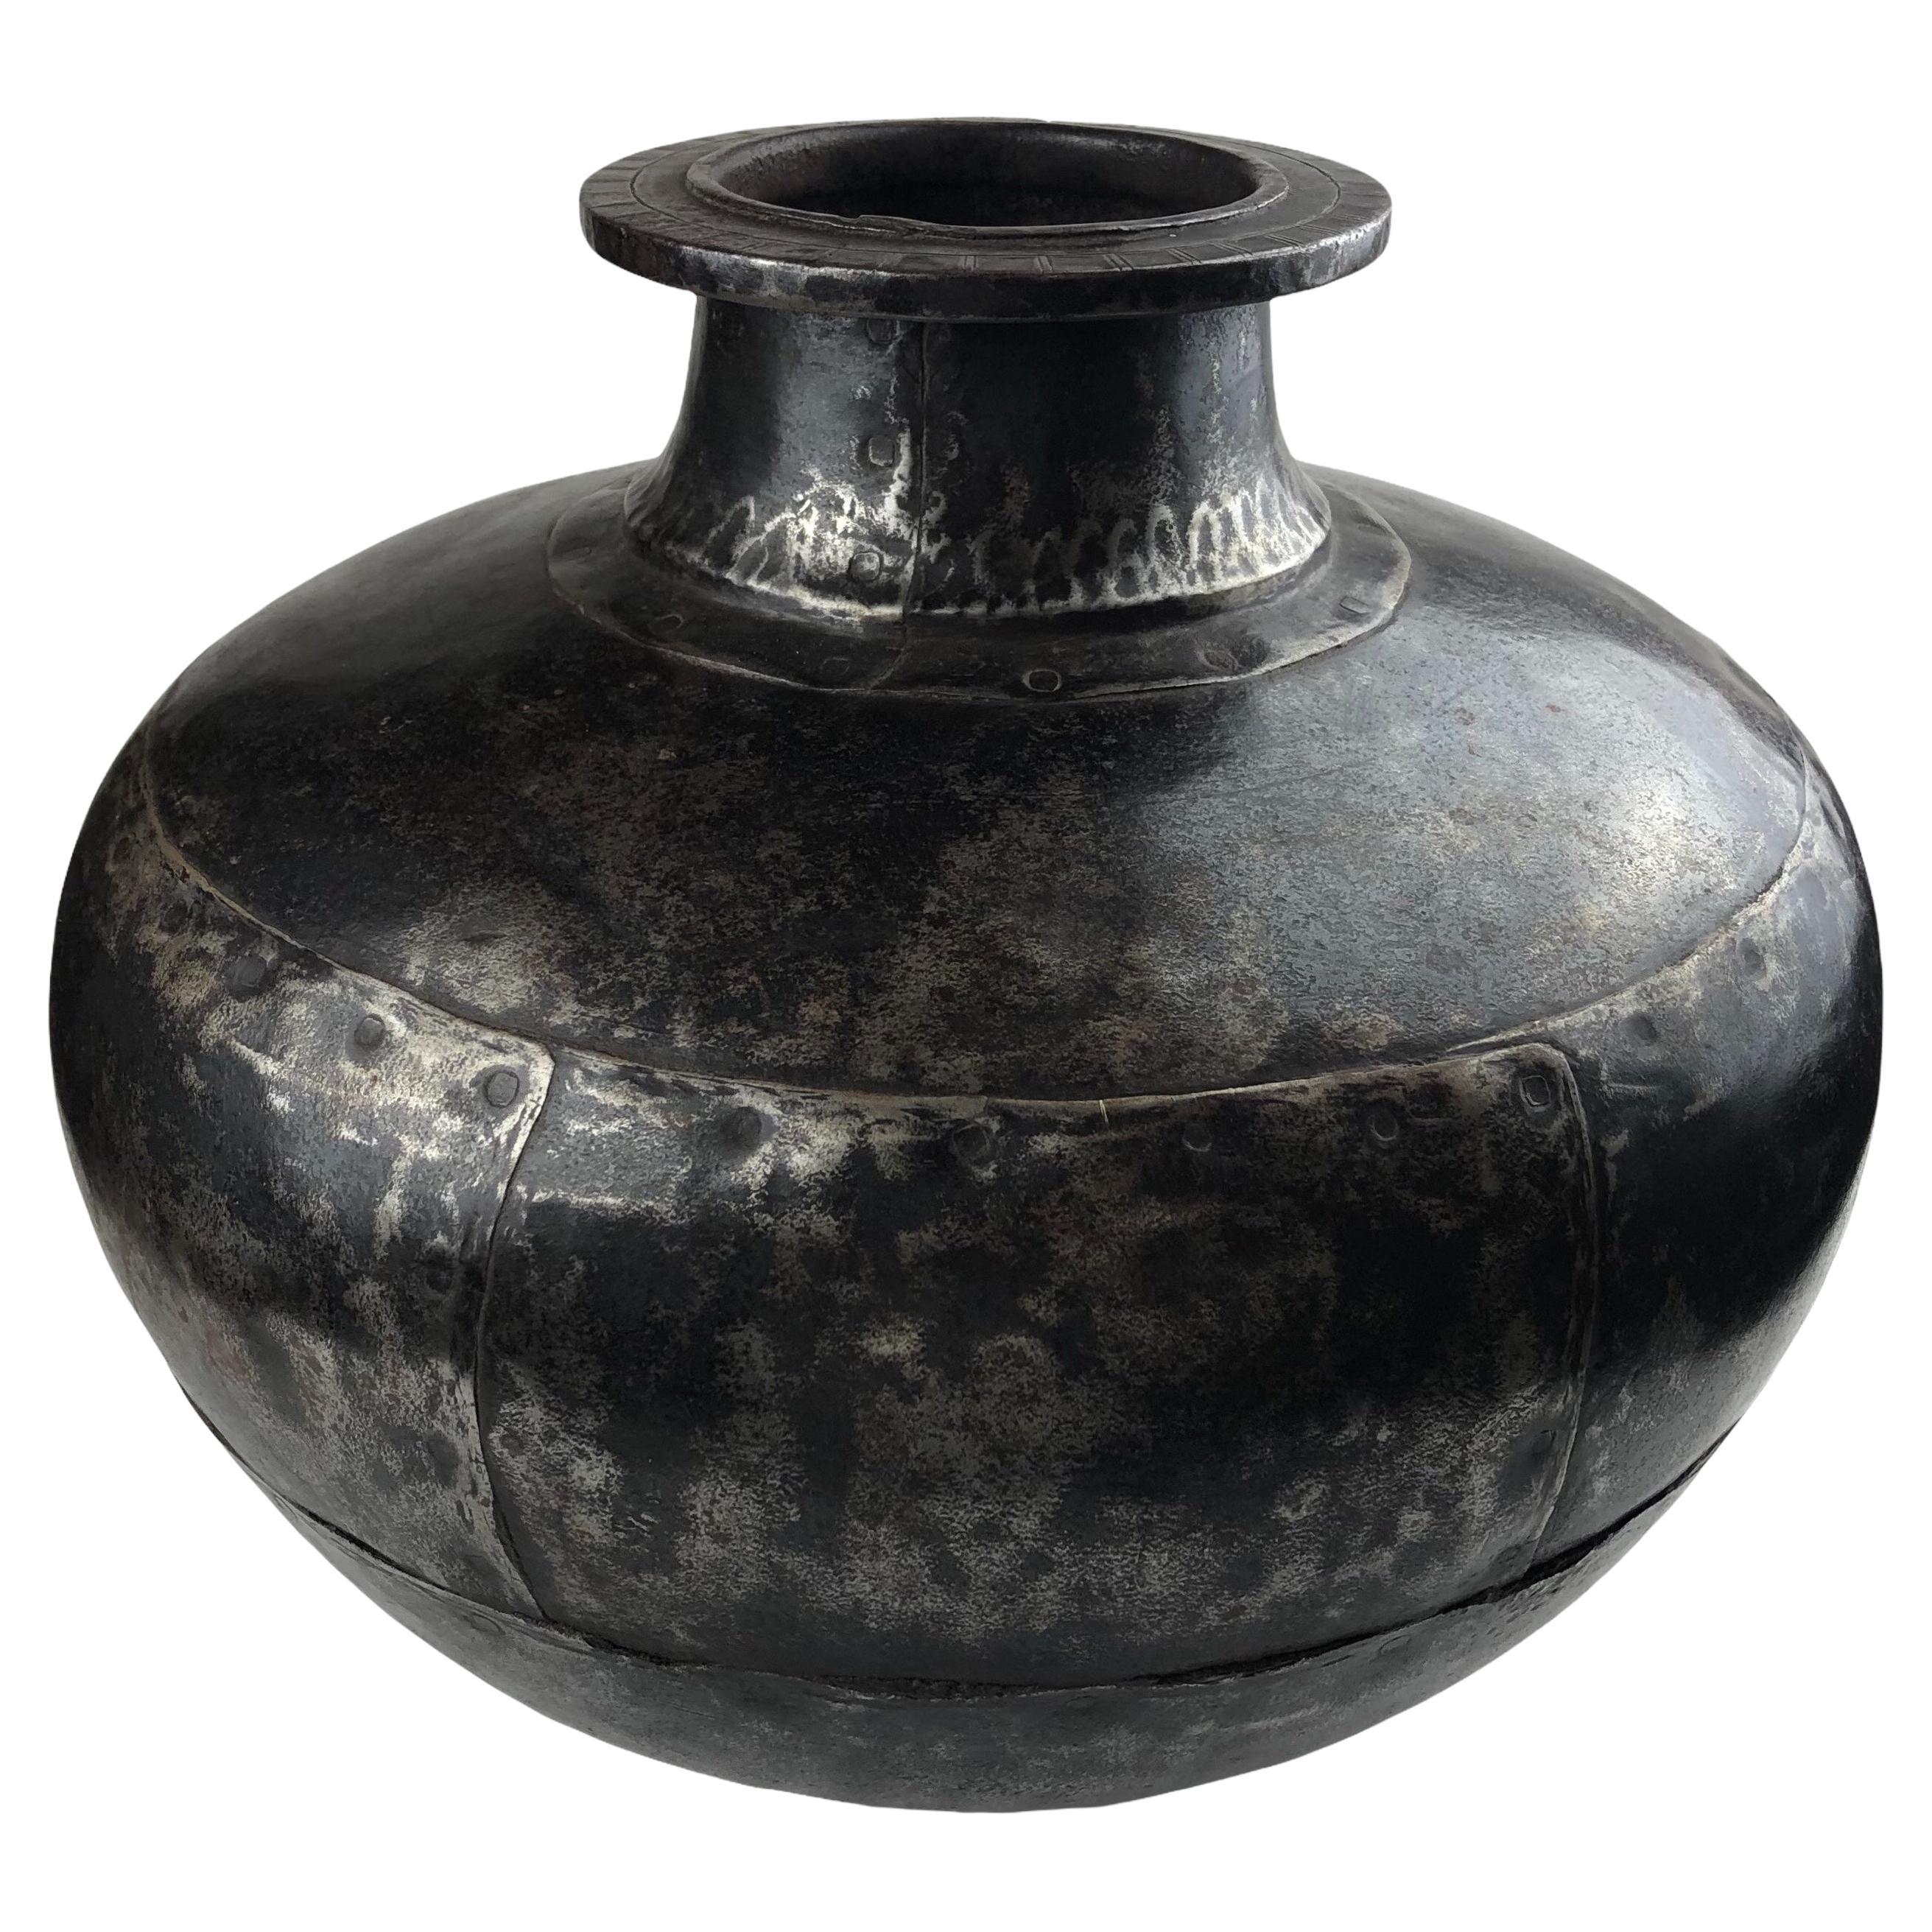 Polished Vintage Indian Metal Vase or Pot with Weathered Patina